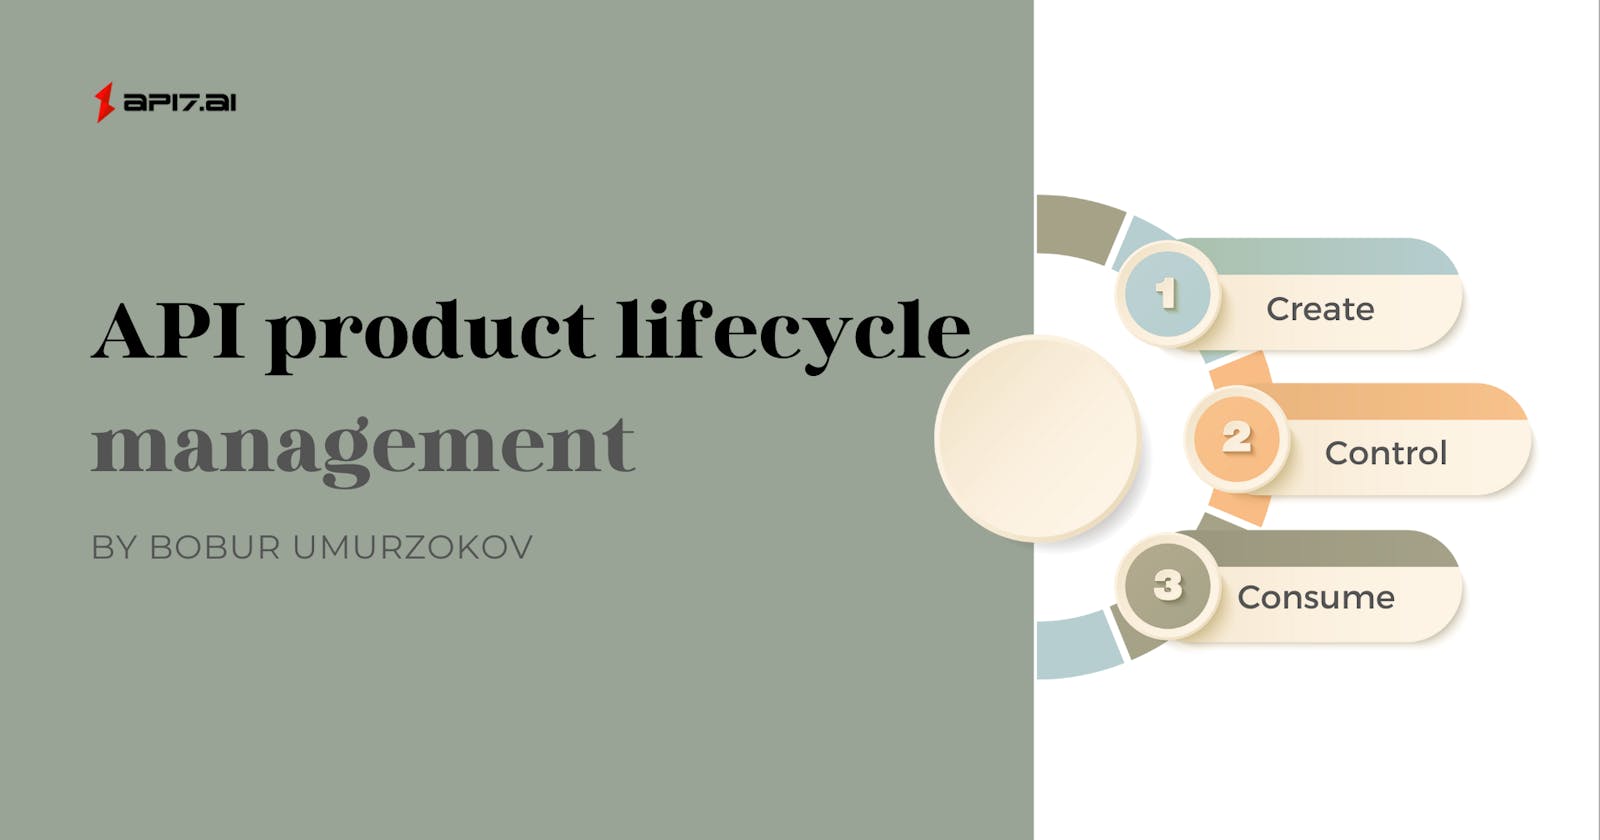 Make API product lifecycle management easy